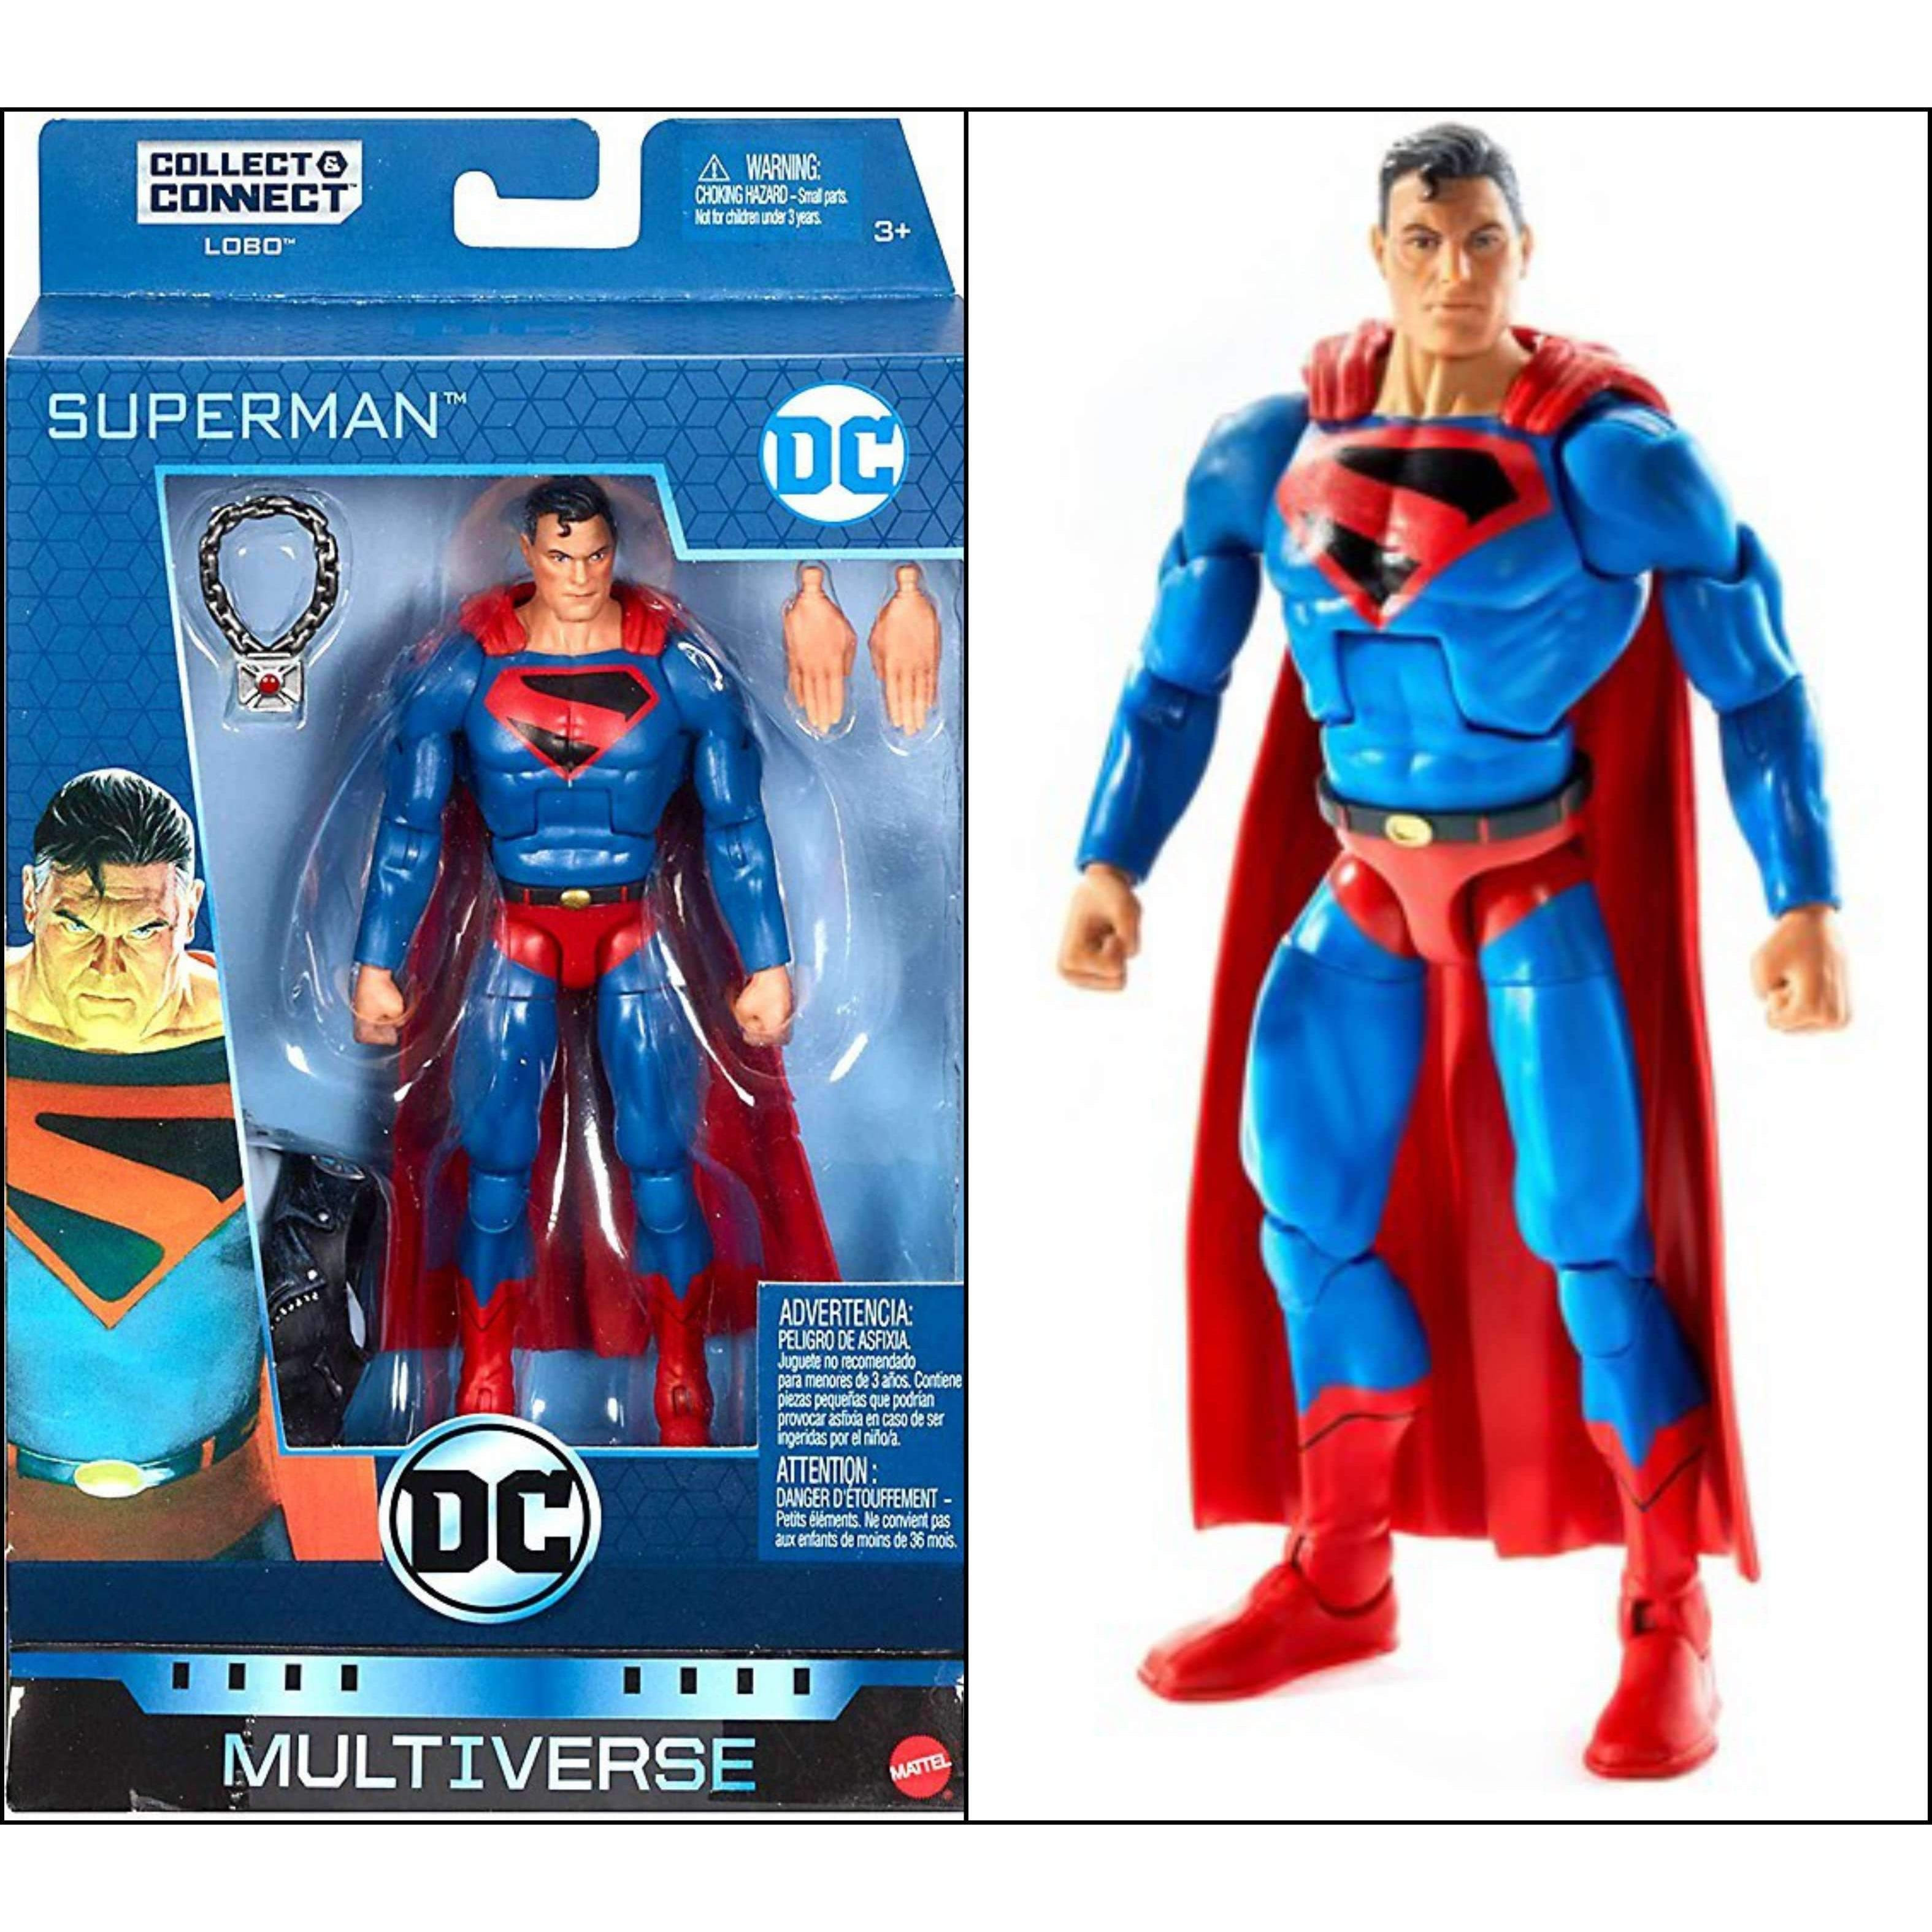 Image of DC Comics Multiverse Wave 10 (Collect & Connect Lobo) - Superman (Kingdom Come)